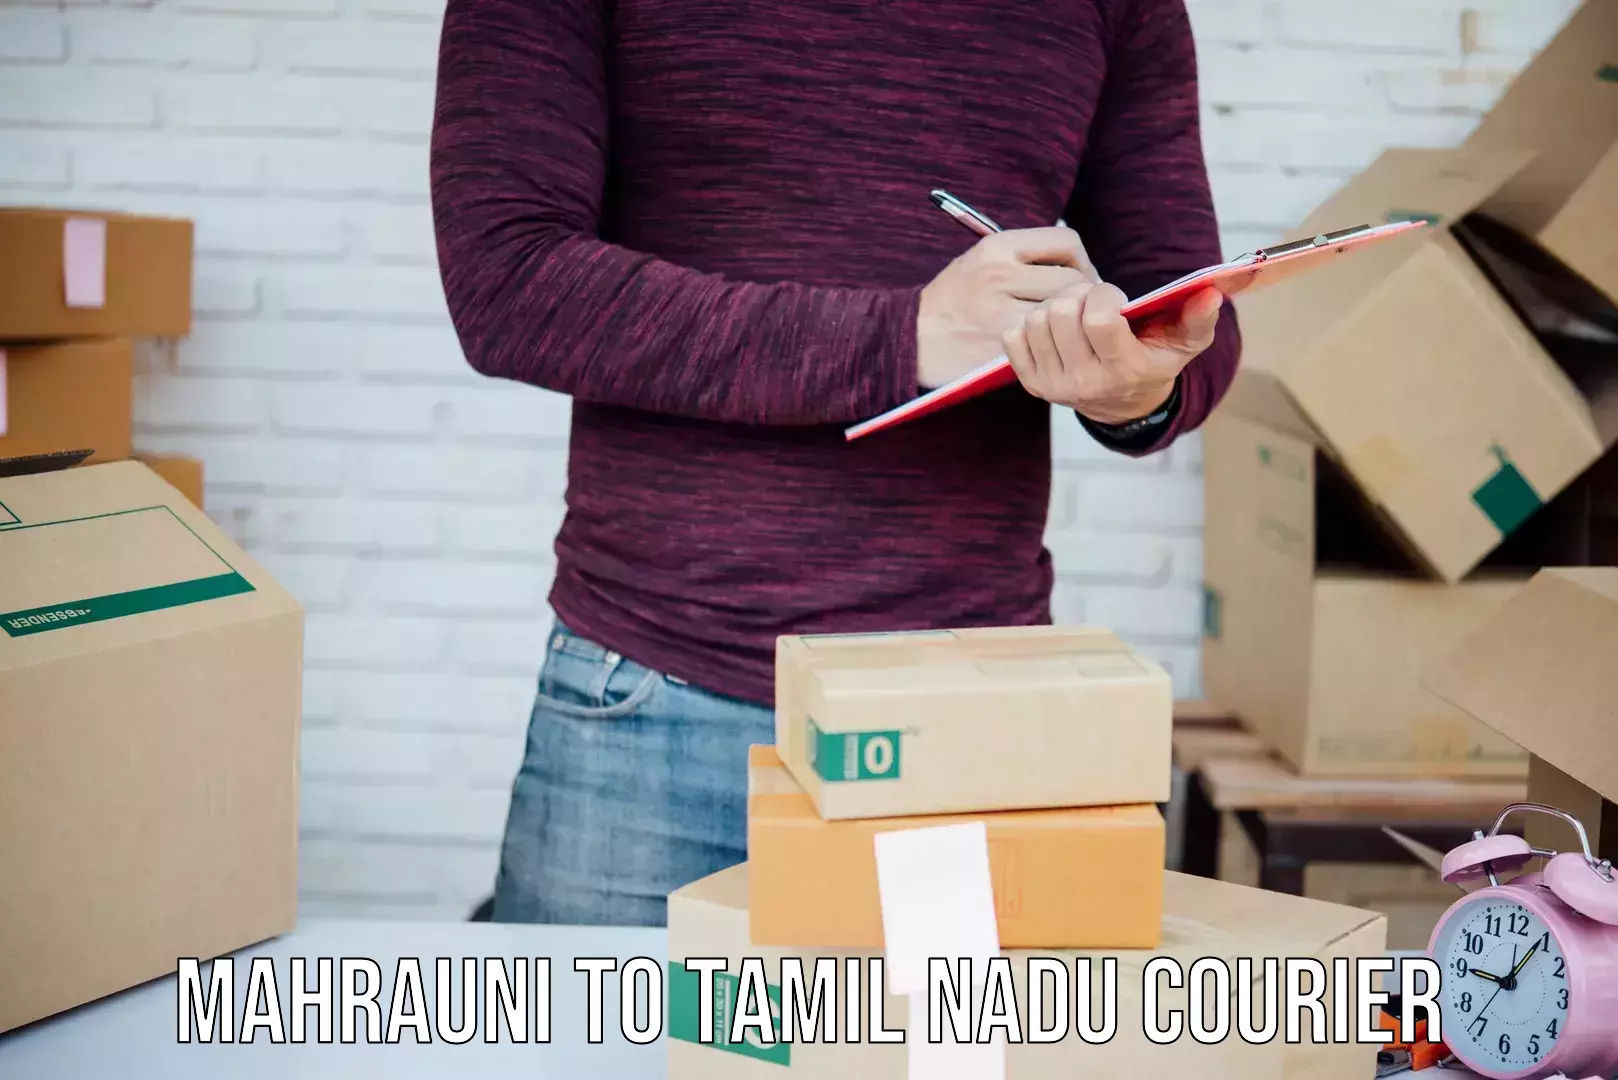 Easy return solutions Mahrauni to Tamil Nadu